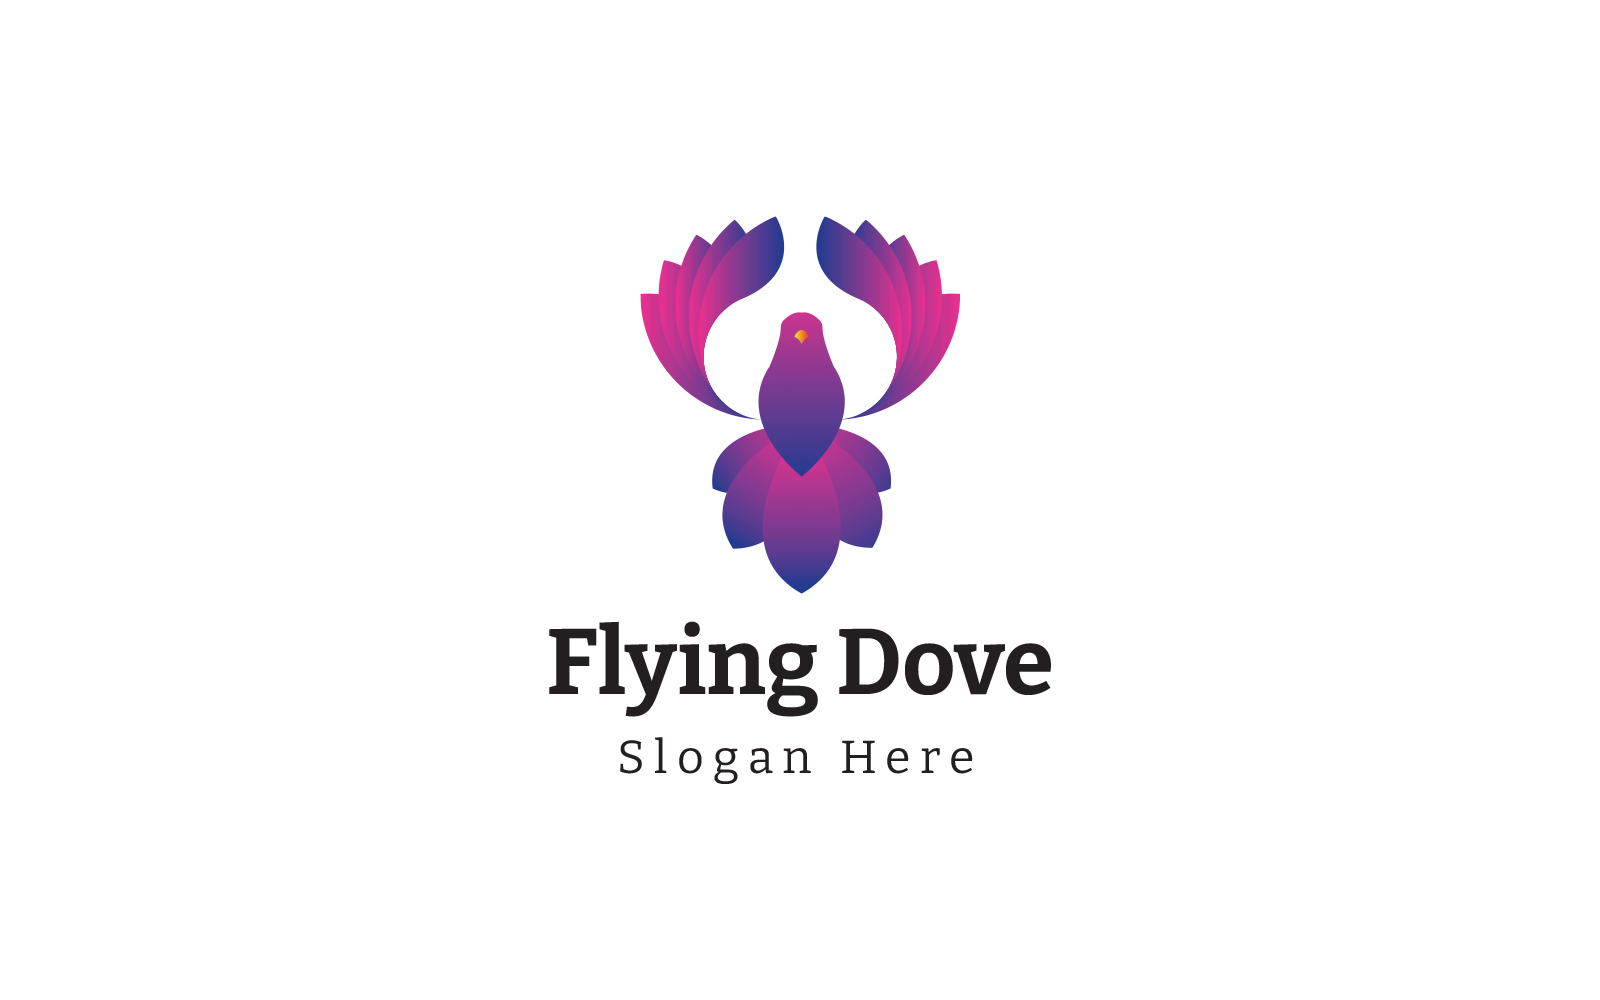 Flying Dove Bird Logo Design Template